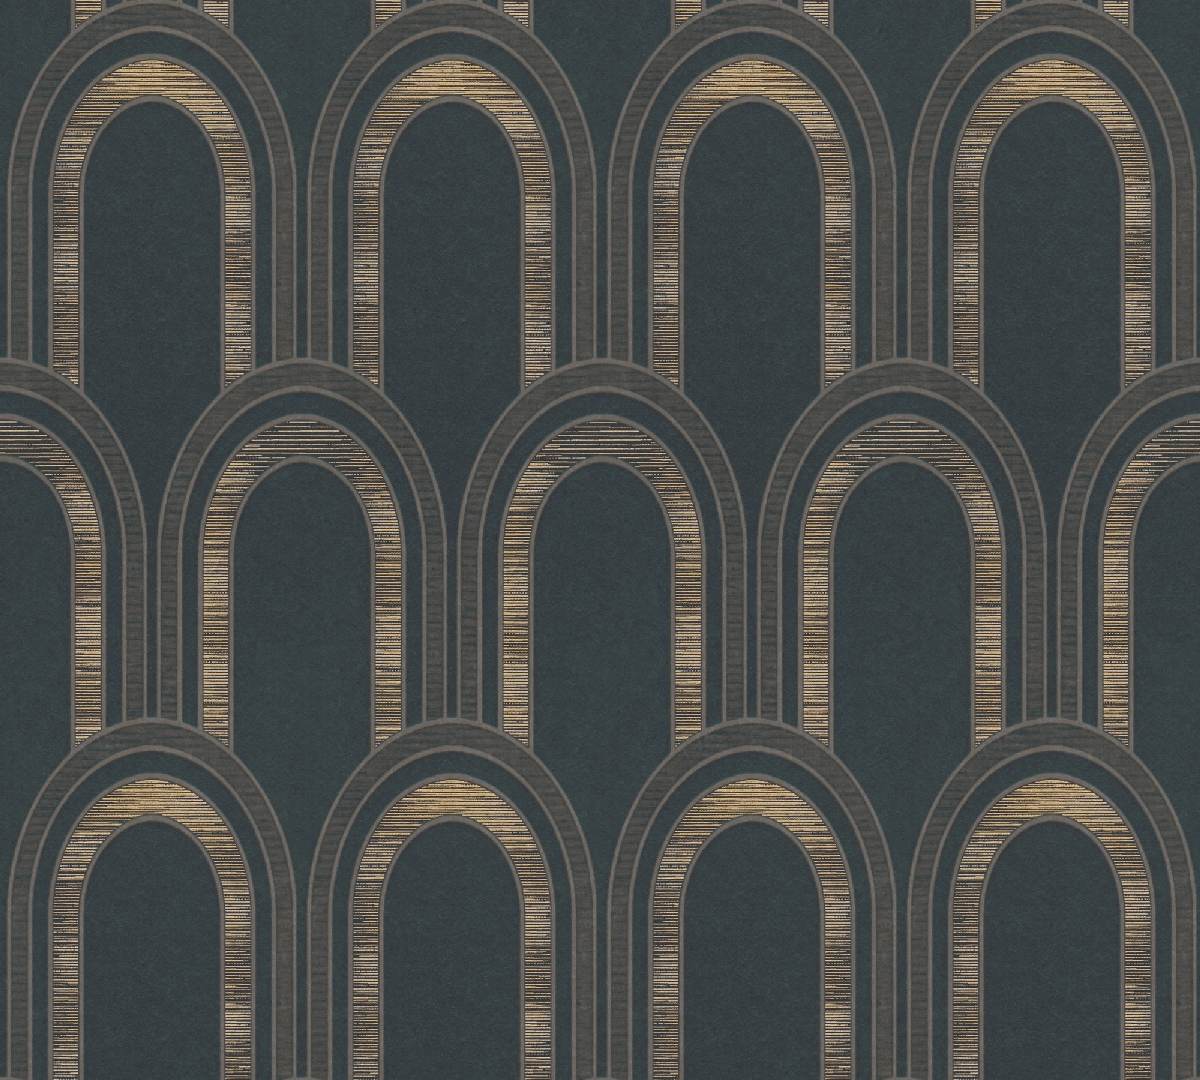 Vliestapete AP Arcade 391762 - Art Deco Muster - Schwarz, Beige